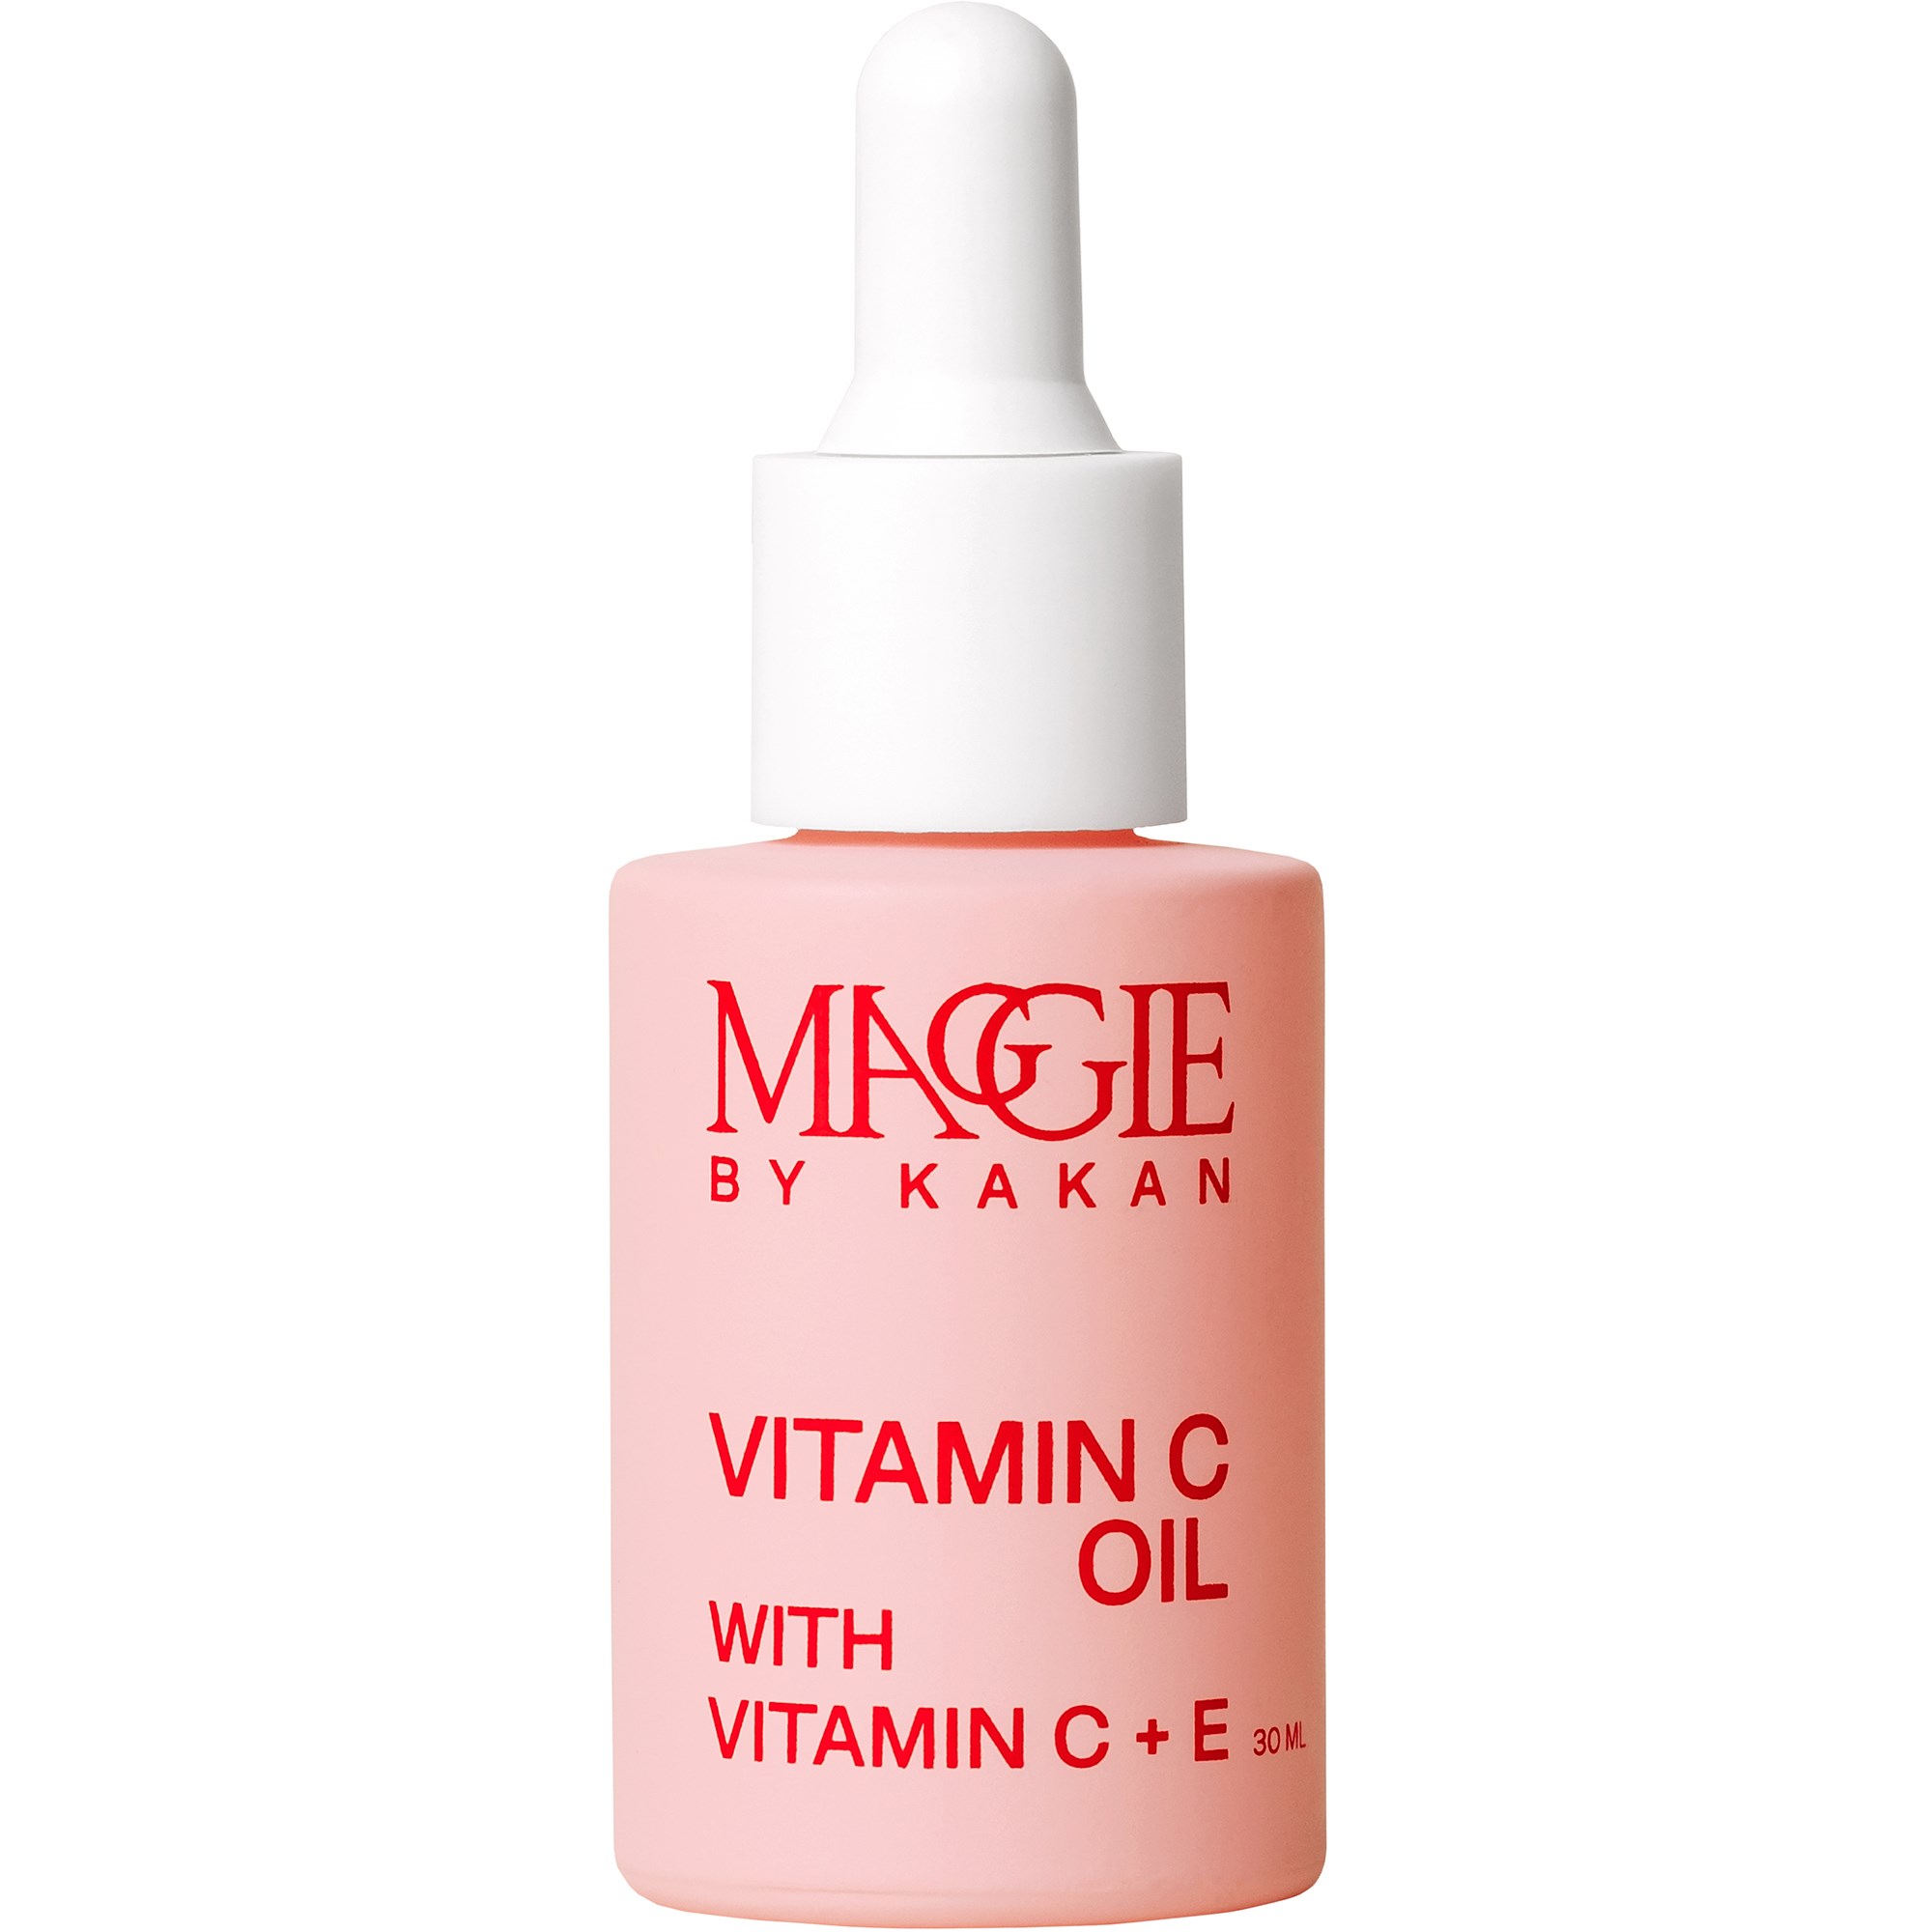 MAGGIE by Kakan Vitamin C Oil 30 ml